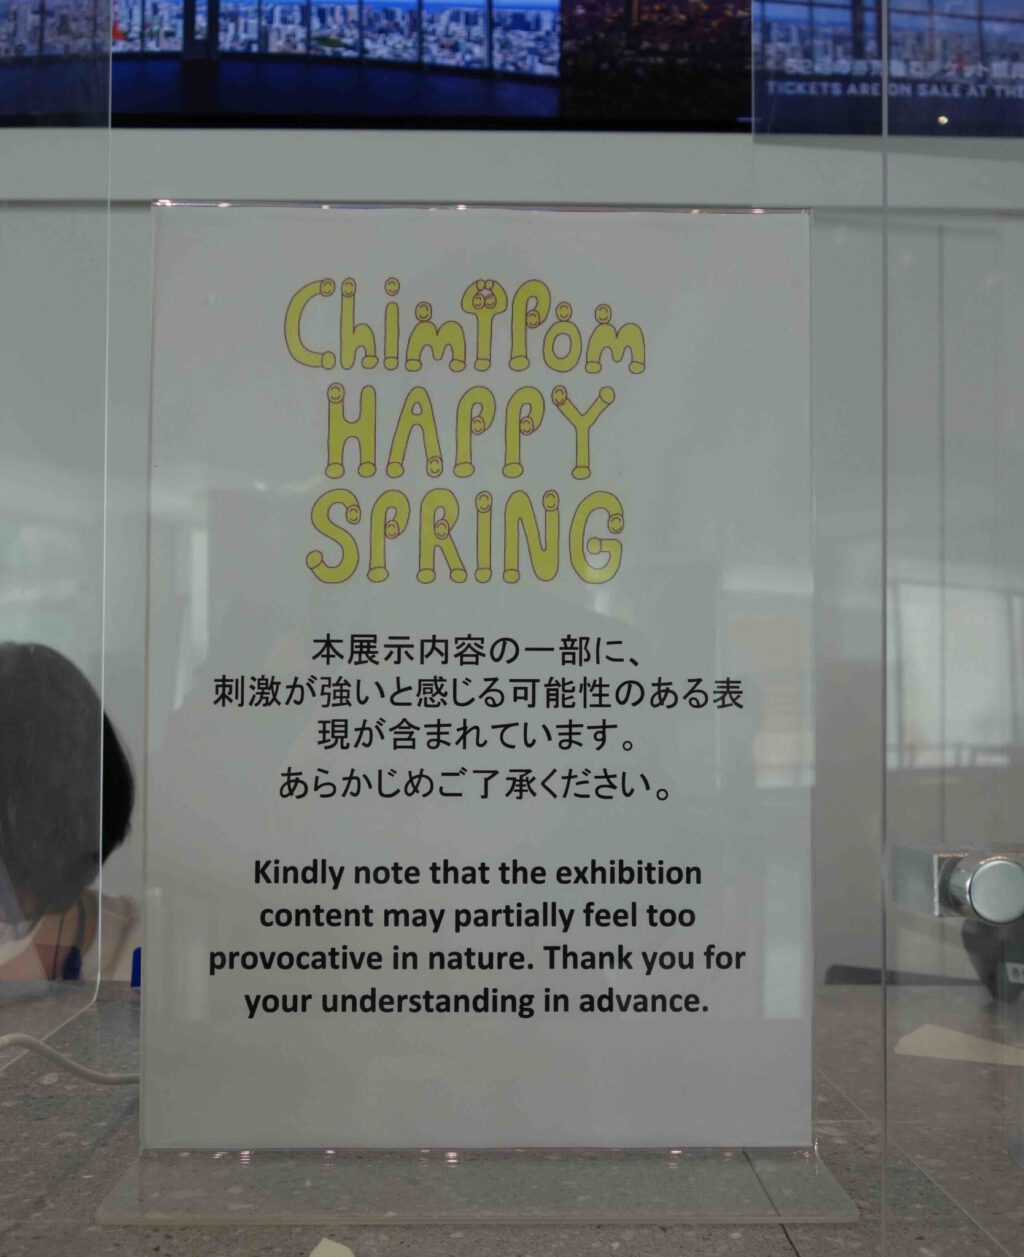 Chim↑Pom展 Happy Spring ハッピースプリング Mori Art Museum Entrance, Ticket Counter